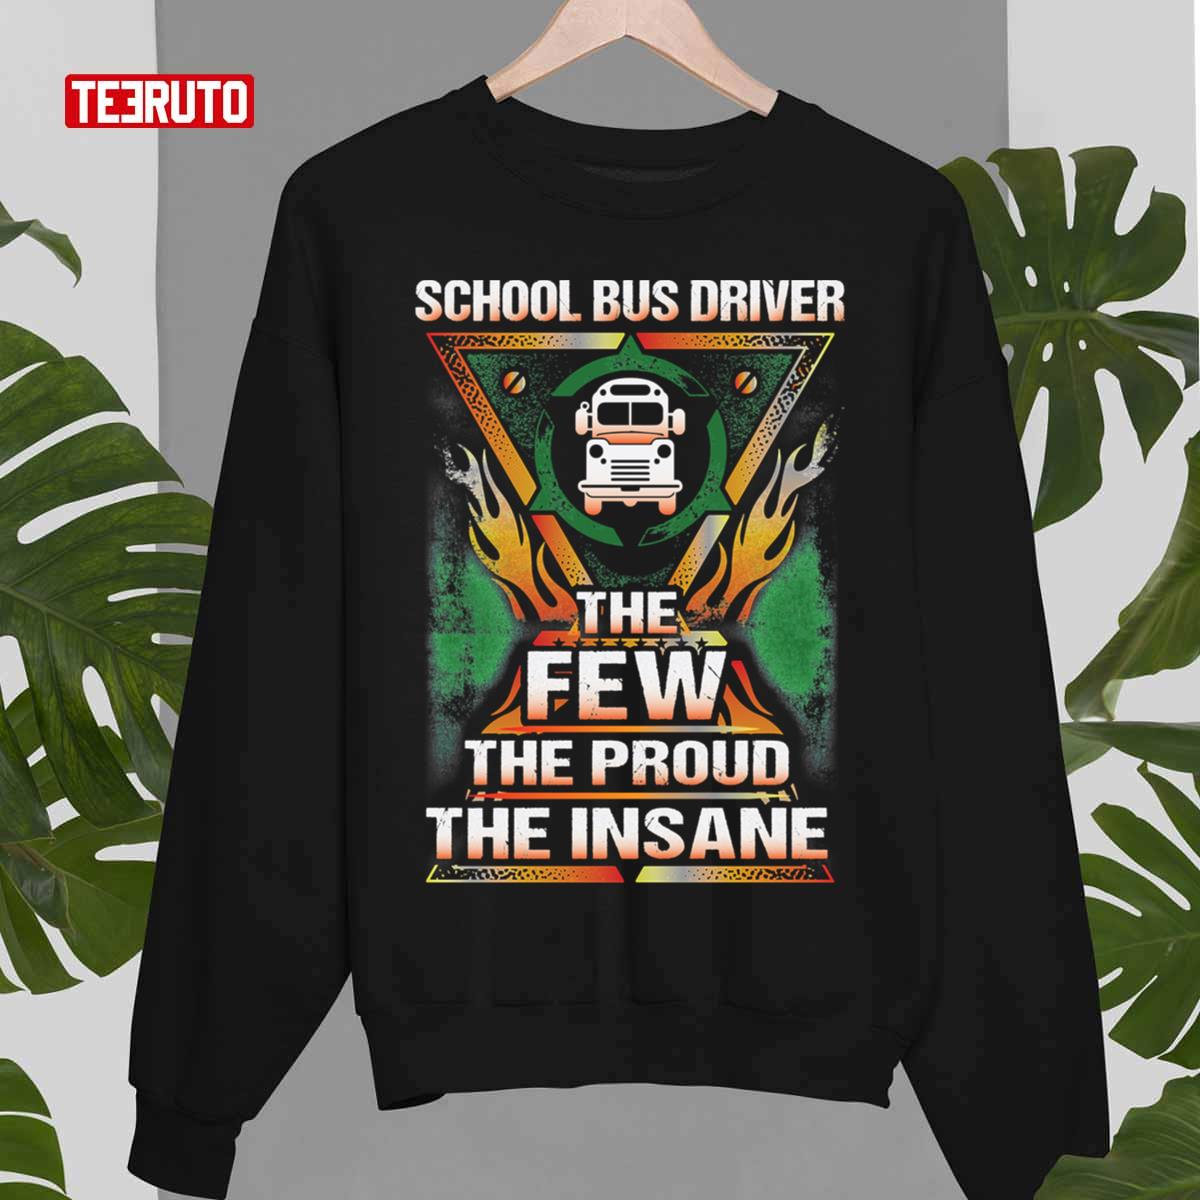 The Insane School Bus Driver Unisex T-Shirt